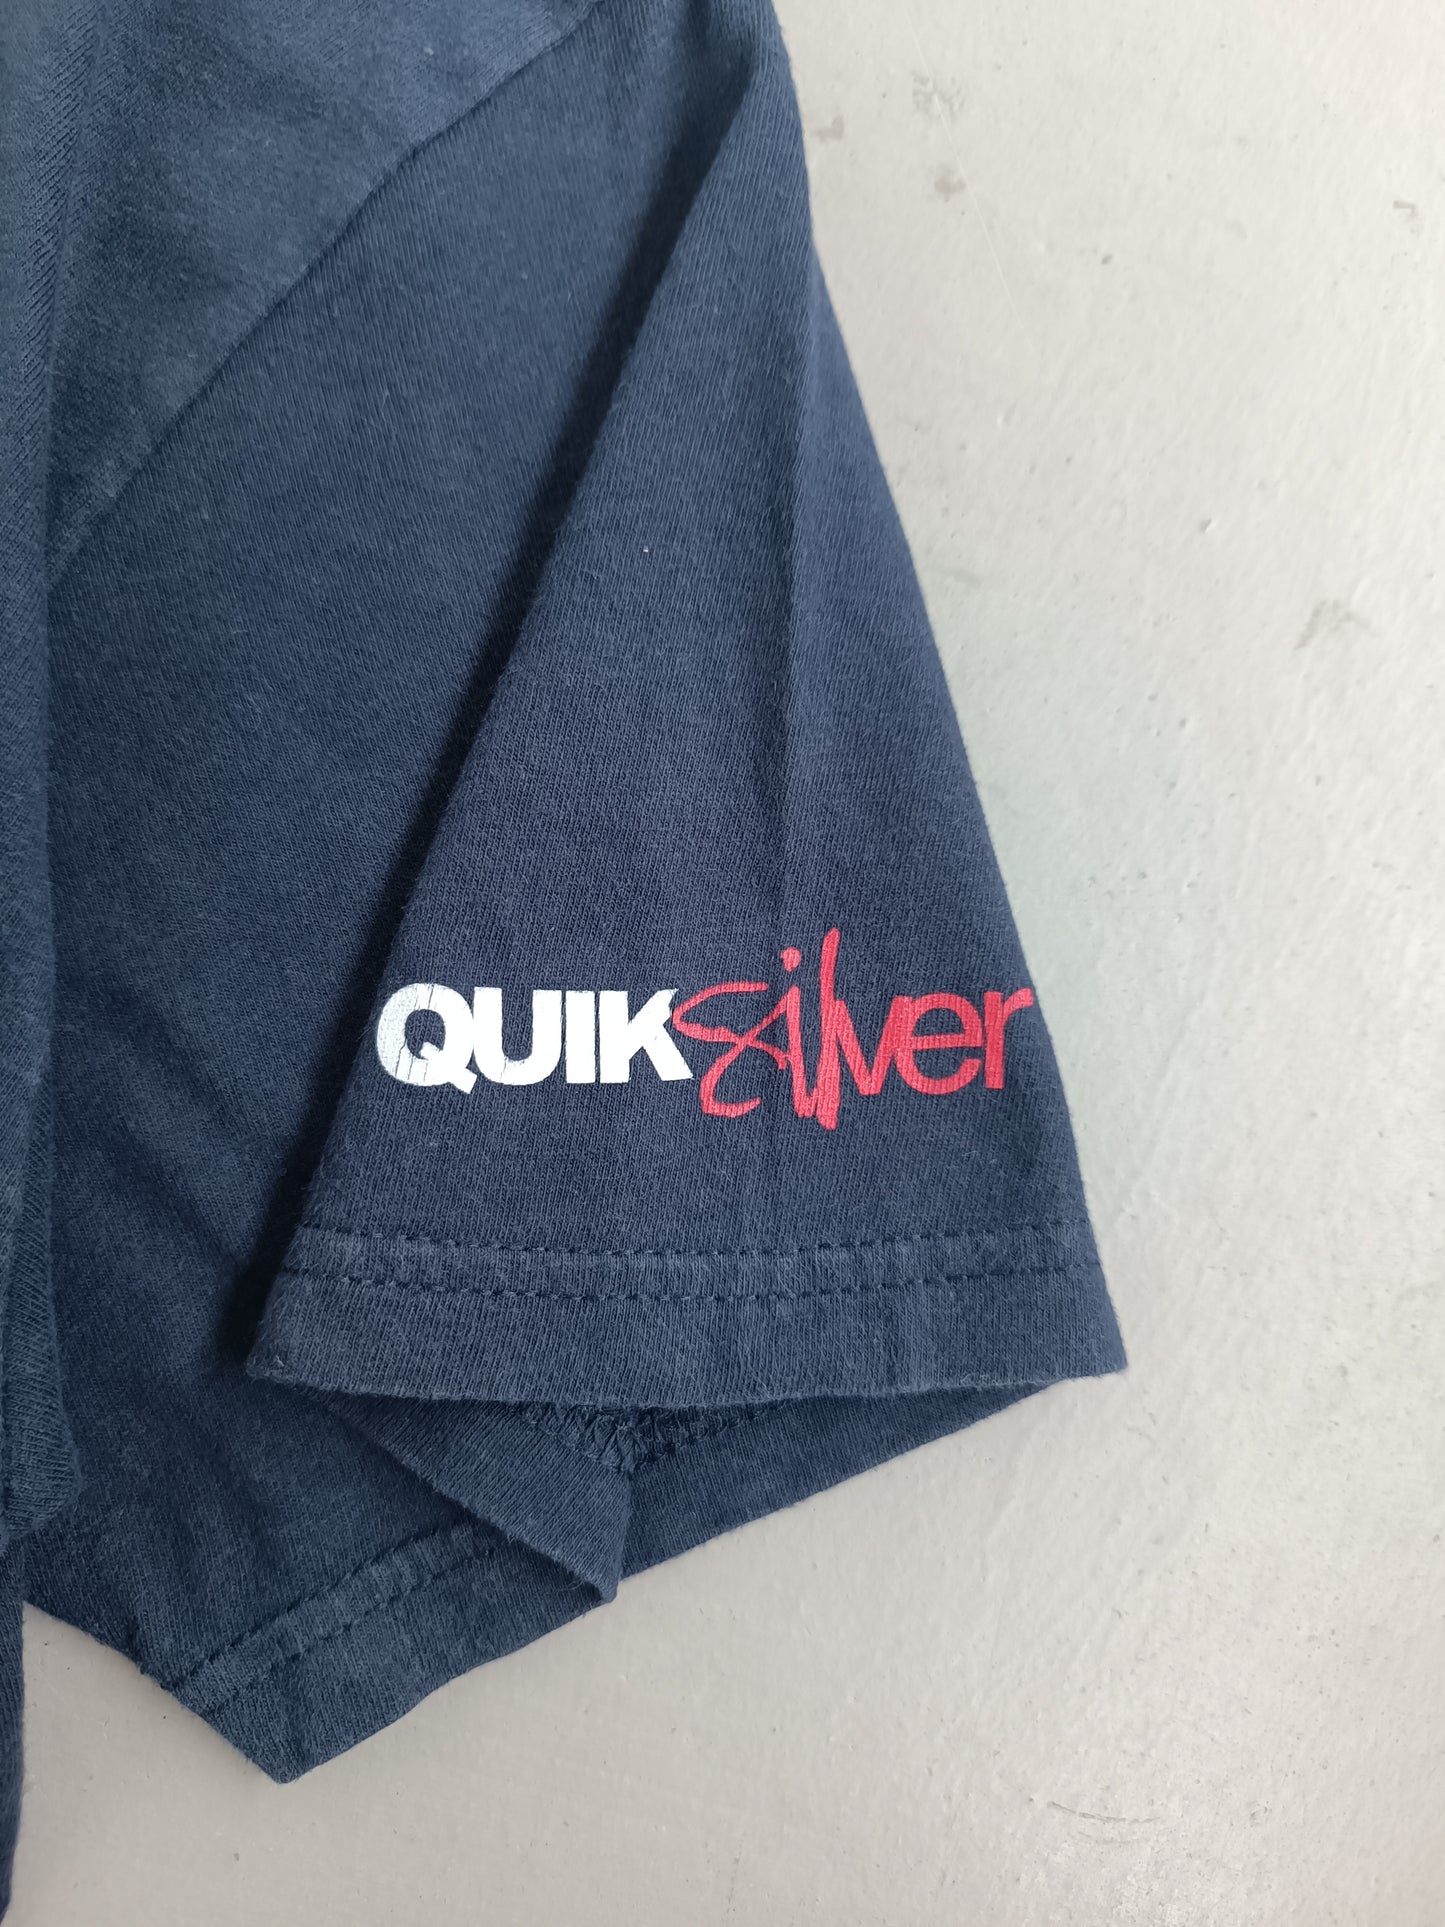 Quiksilver logo - M